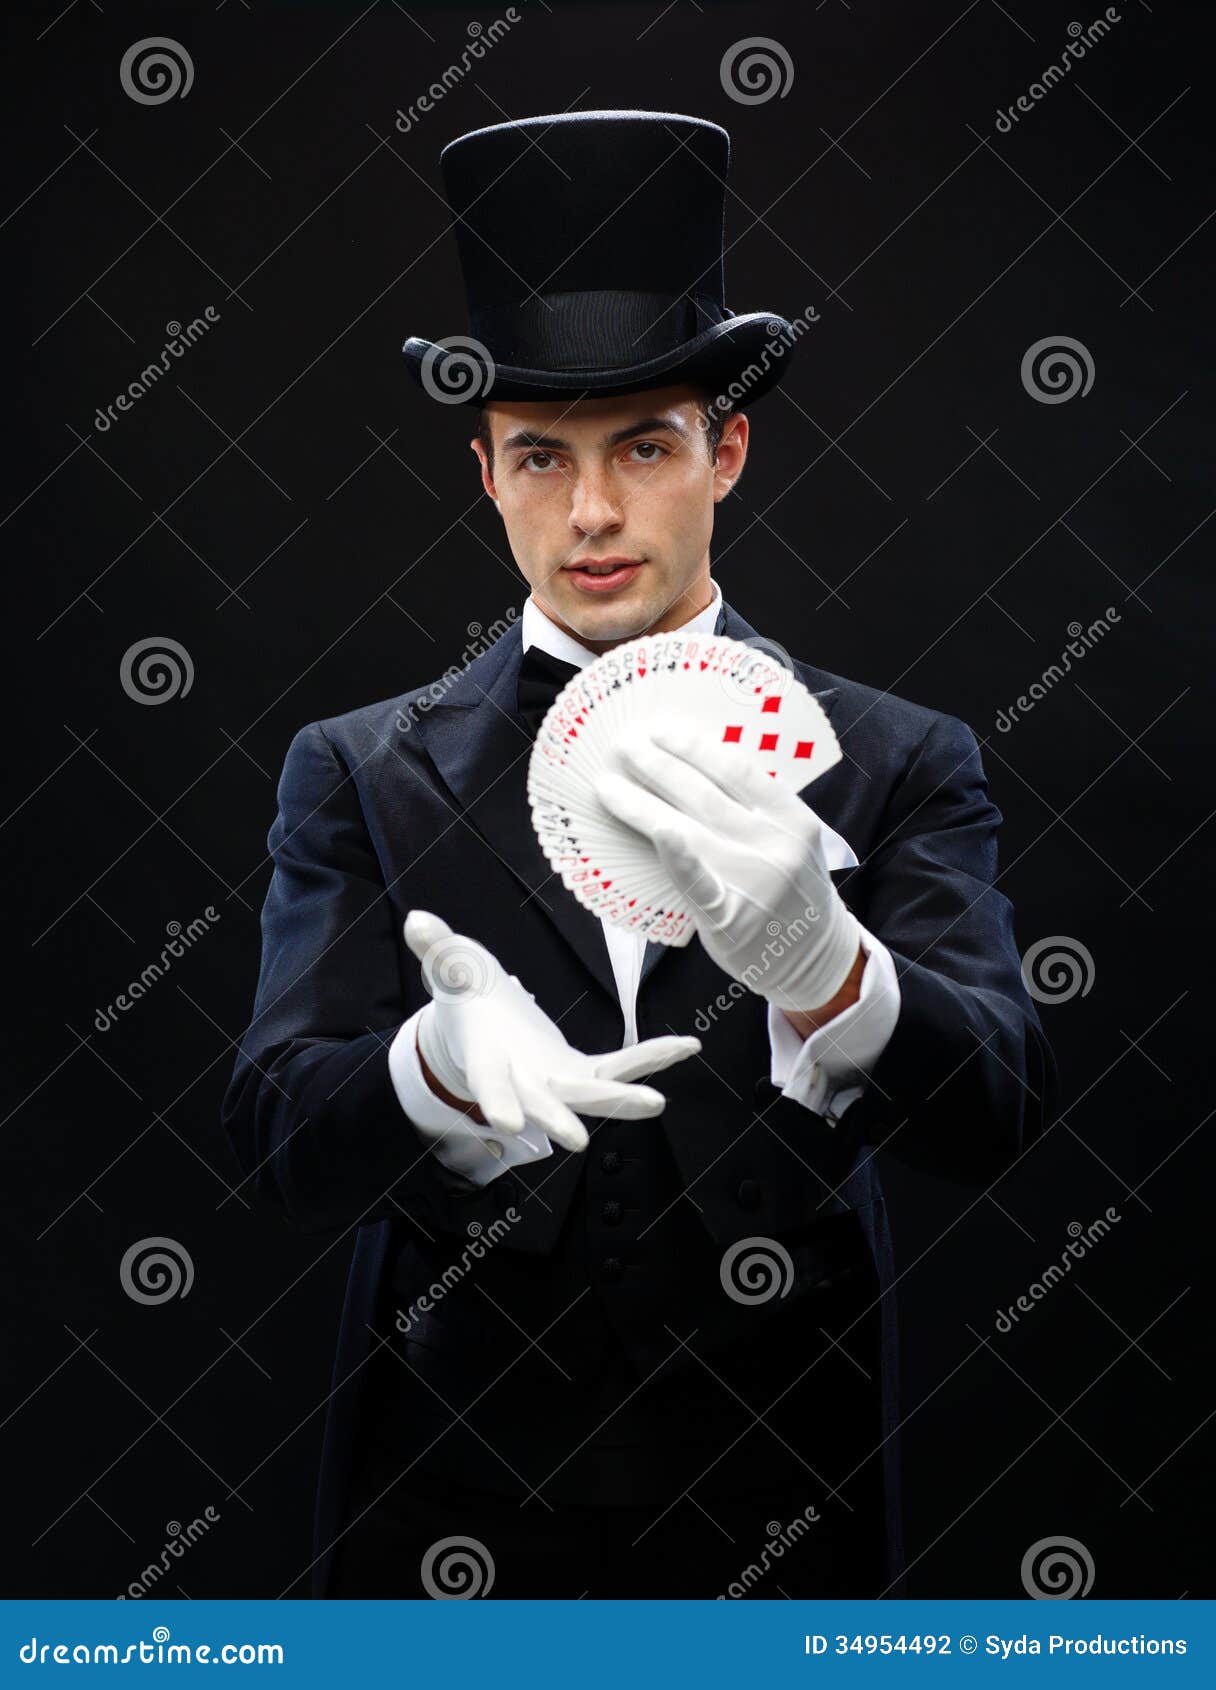 Royal ace online casino no deposit bonus codes